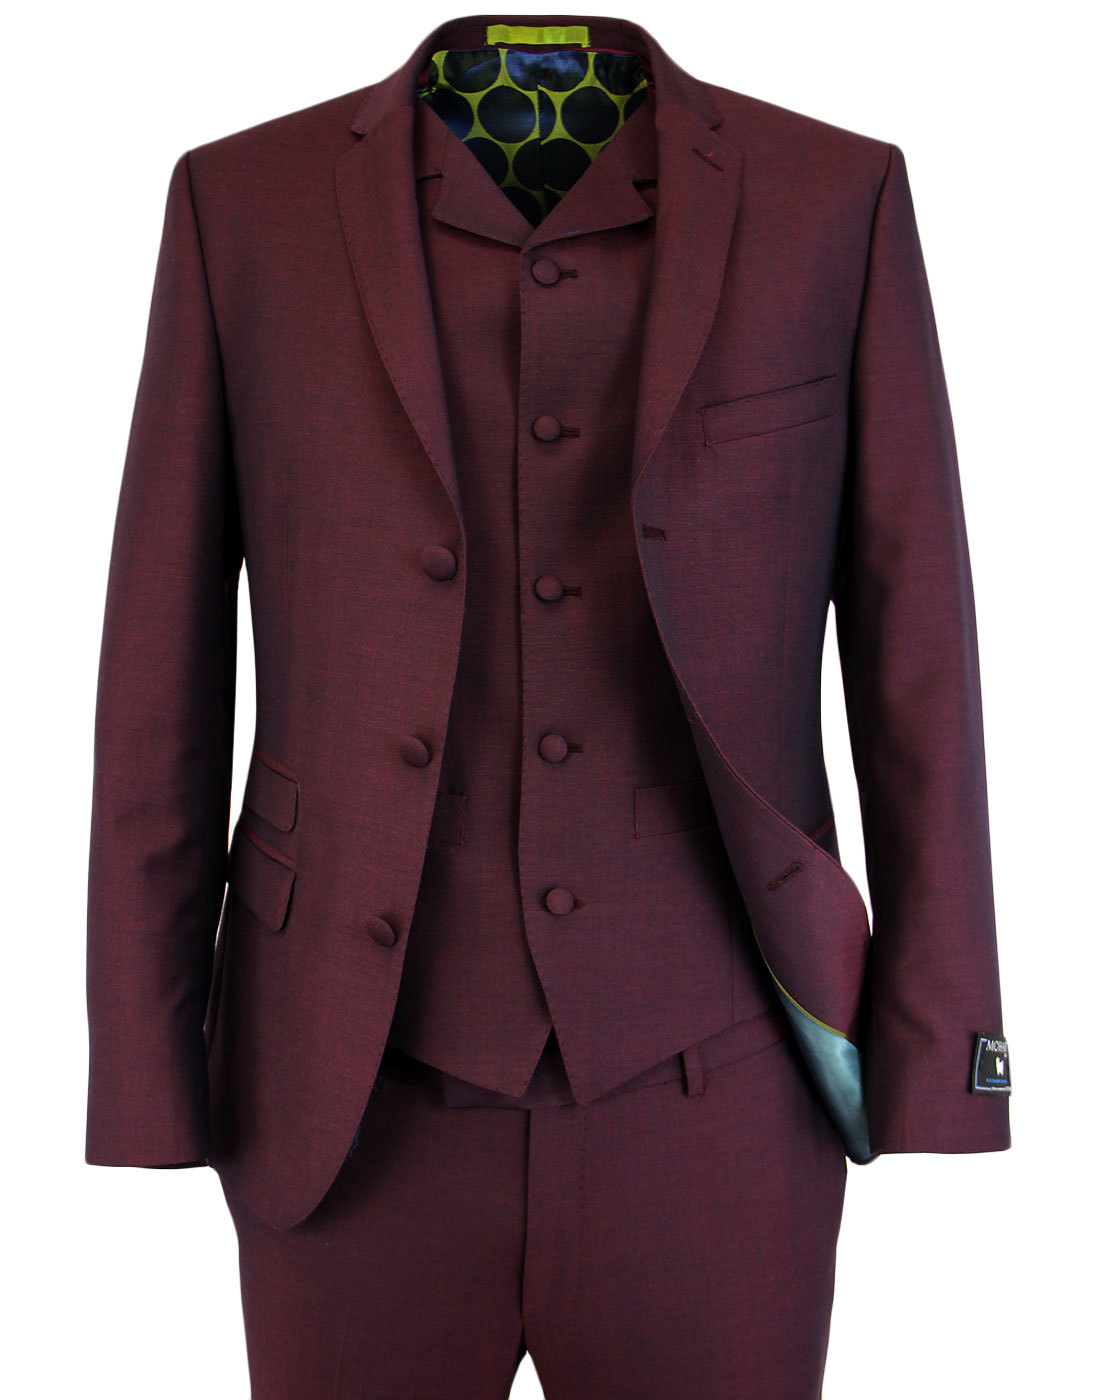 Madcap England Retro Mod 3 Piece Mohair Tonic Suit in Burgundy